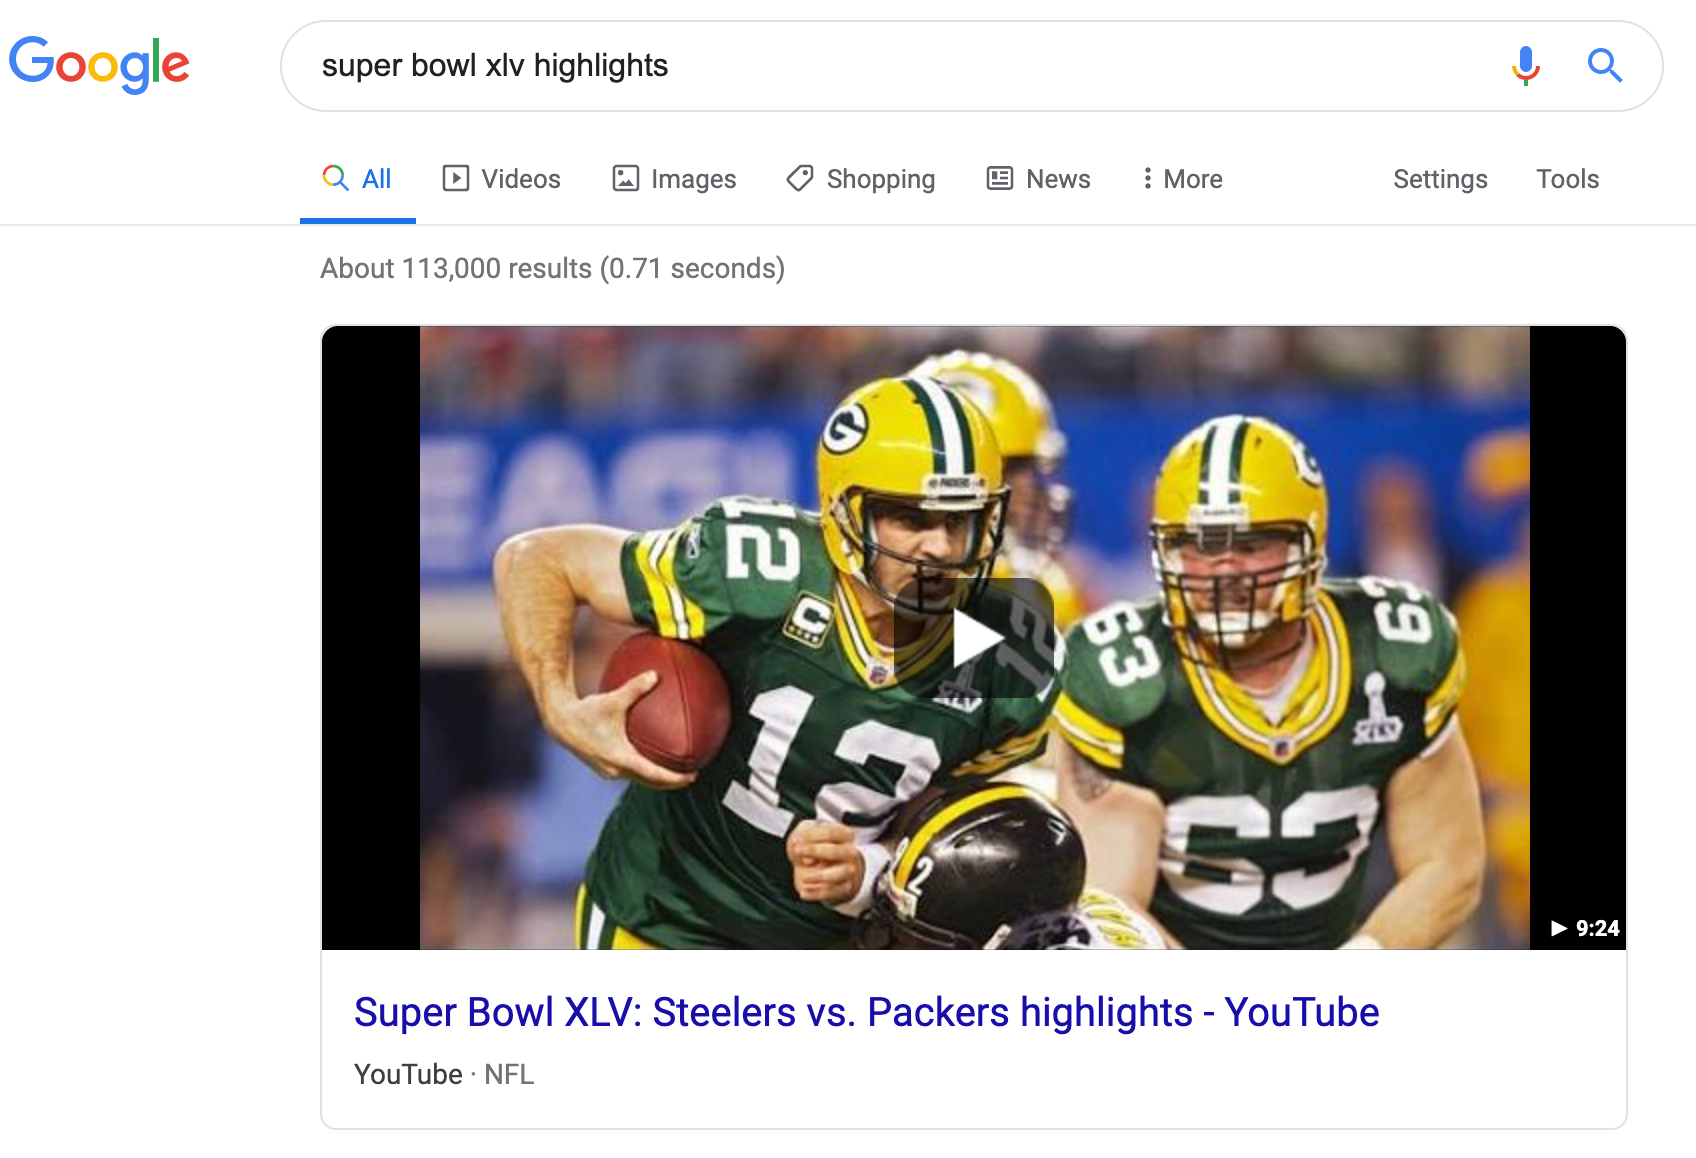 super bowl xlv highlights - Google Search